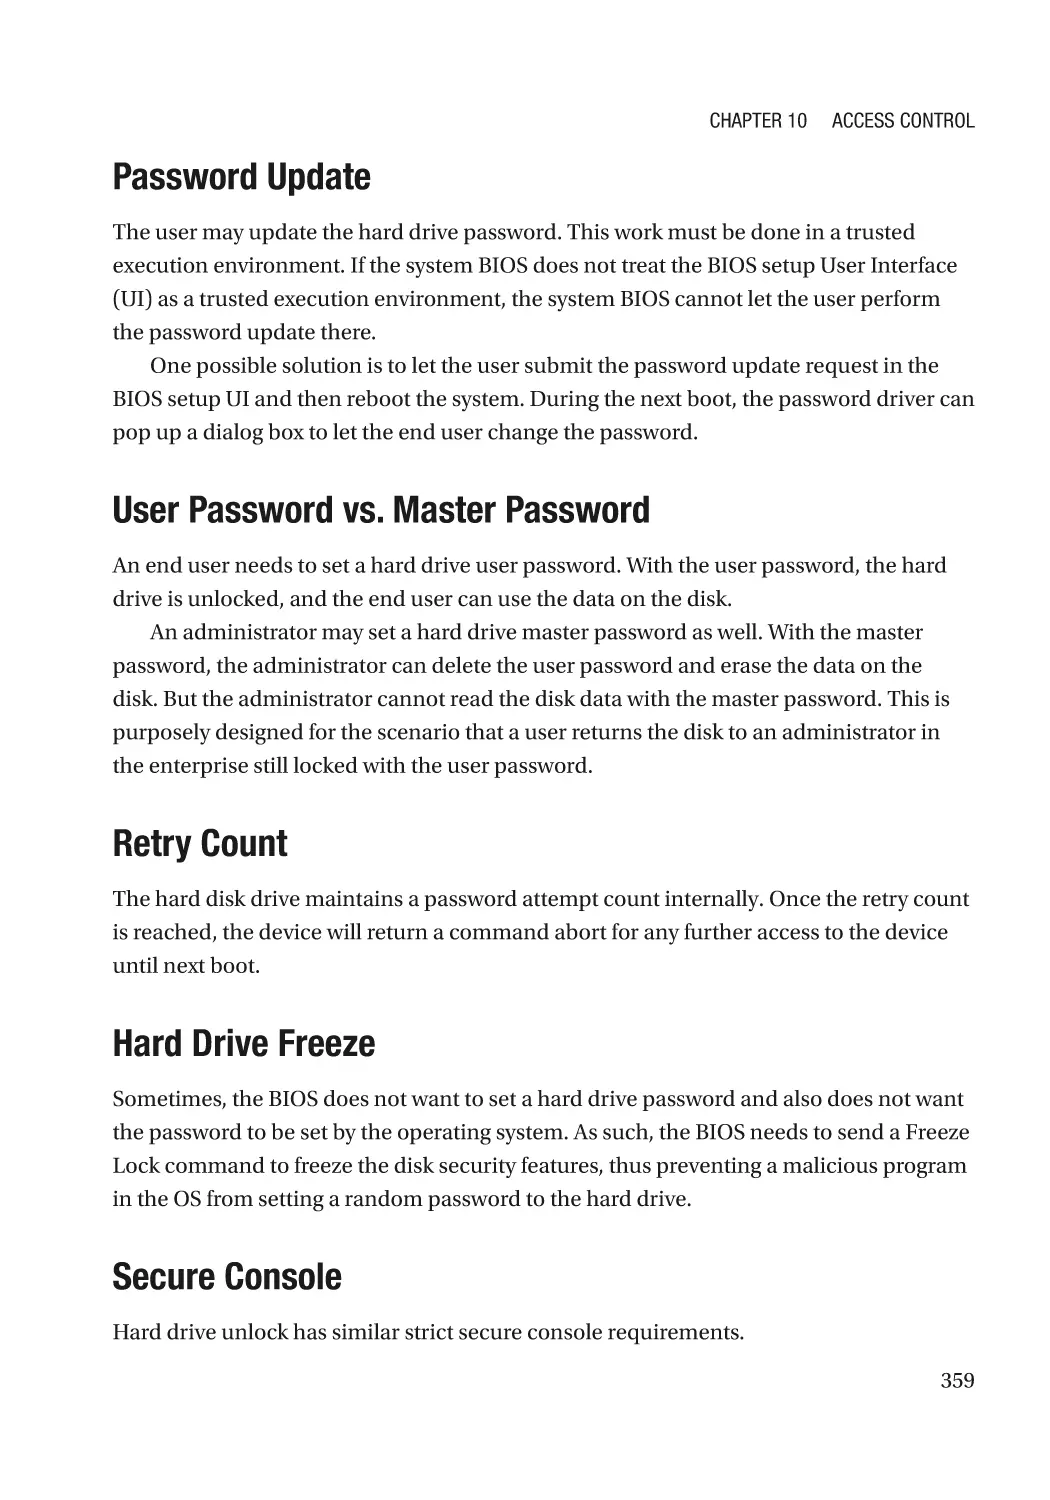 Password Update
User Password vs. Master Password
Retry Count
Hard Drive Freeze
Secure Console